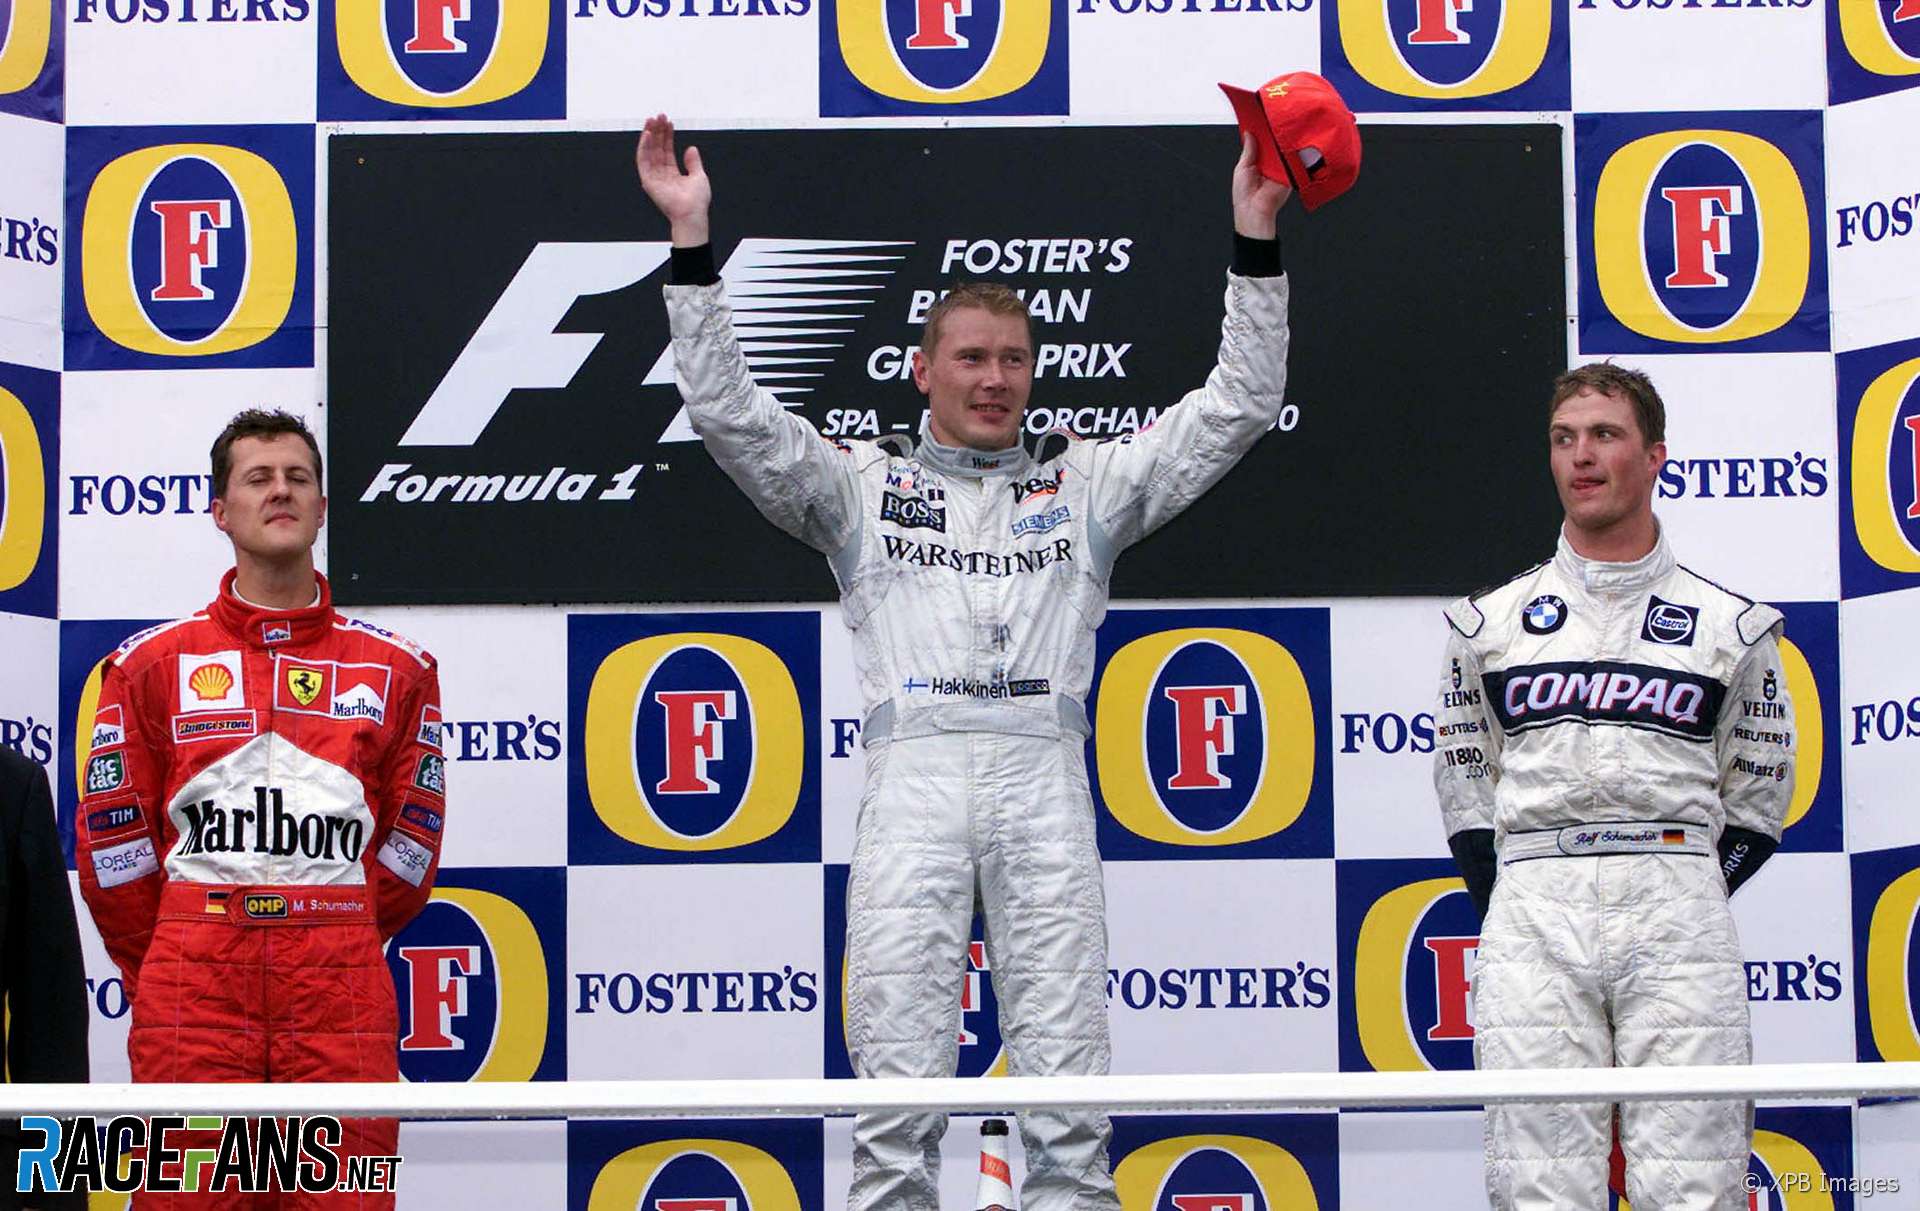 Mika Hakkinen, Michael Schumacher, David Coulthard, Spa-Francorchamps, 2000